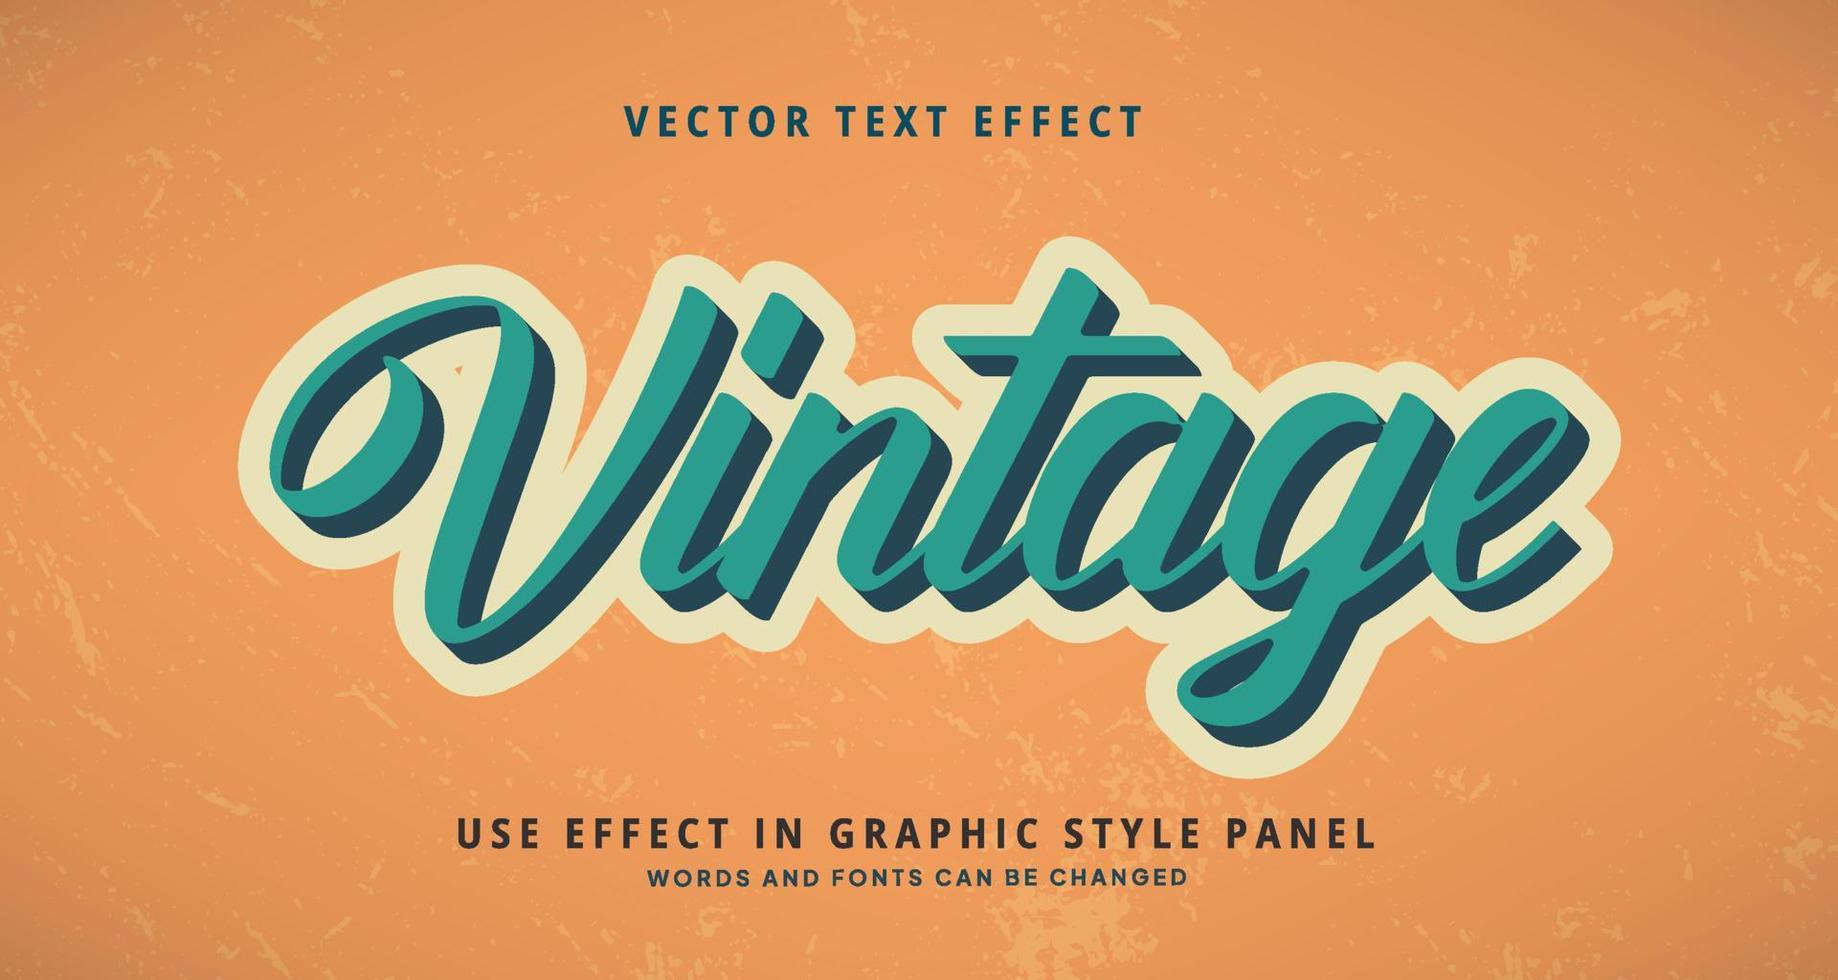 Editable Text Effect Vintage Style vector